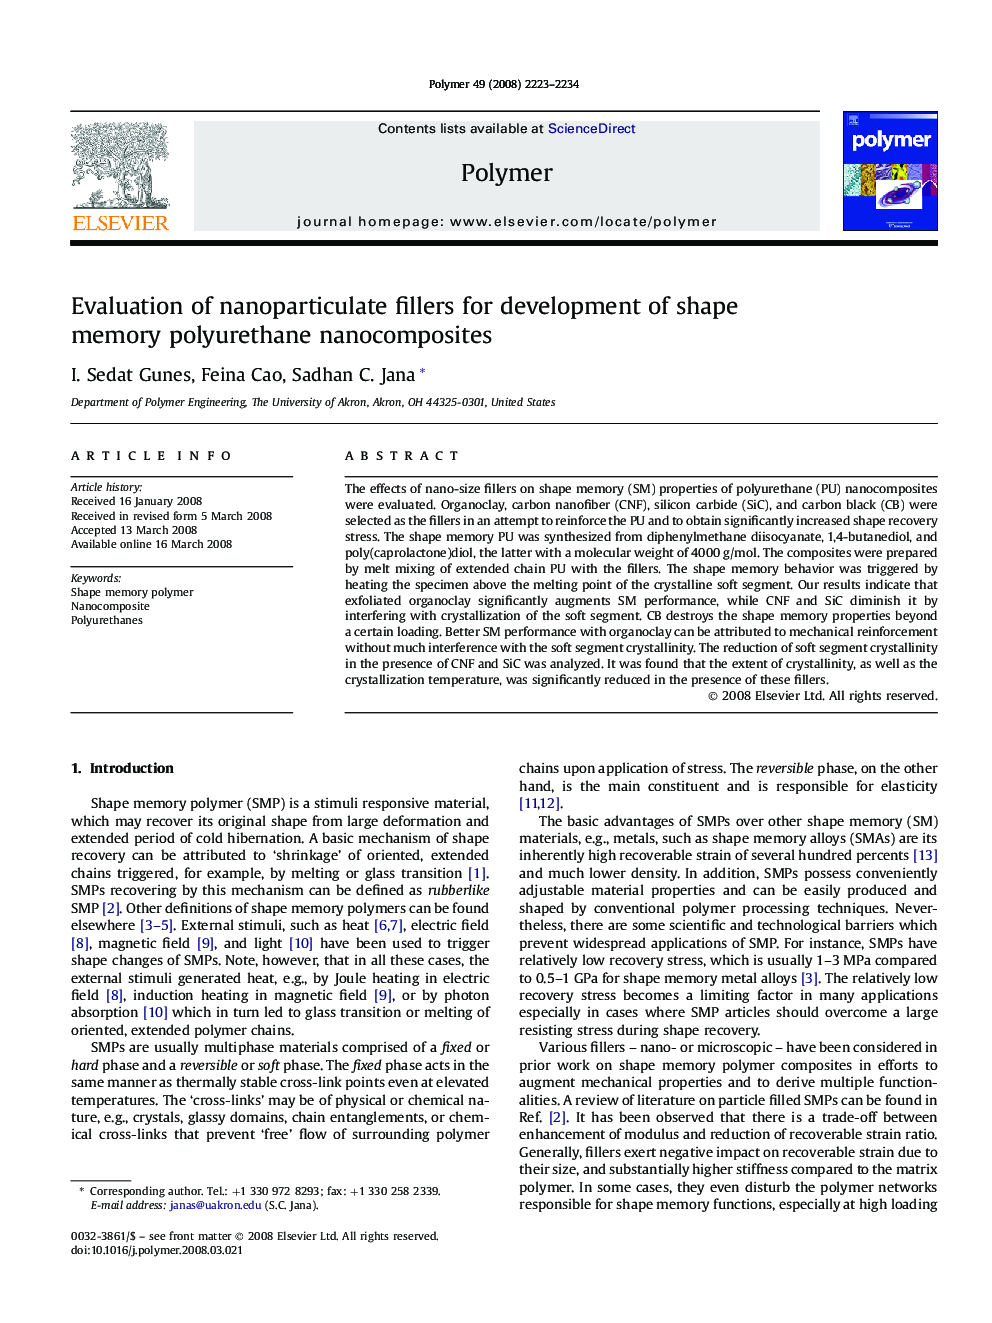 Evaluation of nanoparticulate fillers for development of shape memory polyurethane nanocomposites